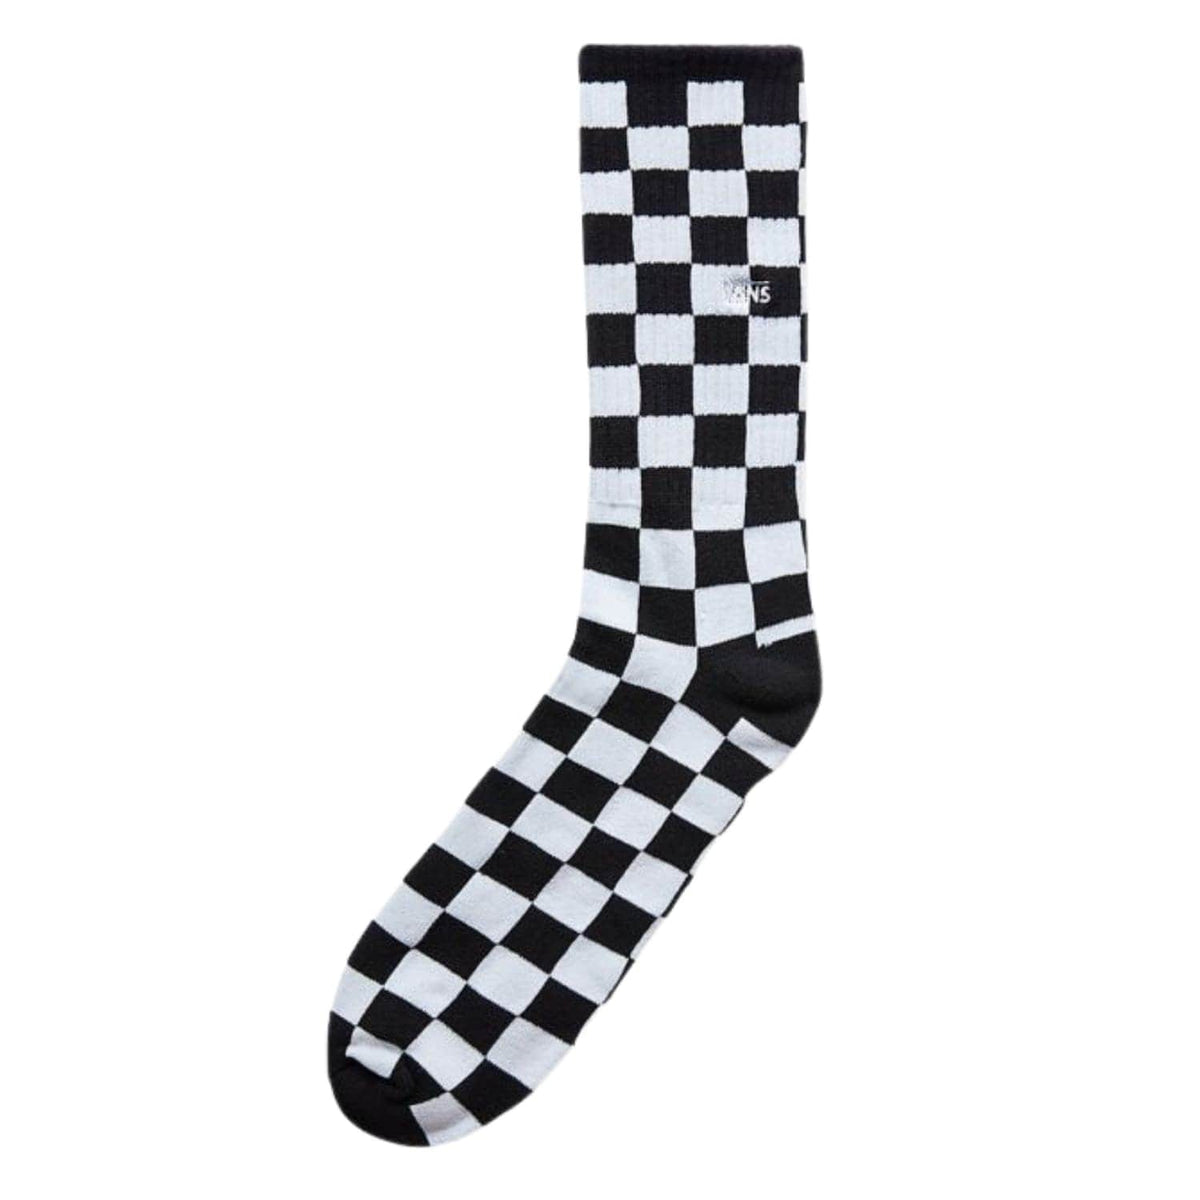 Vans Checkerboard Crew Socks Black White - Mens Crew Length Socks by Vans 8.5-12 UK